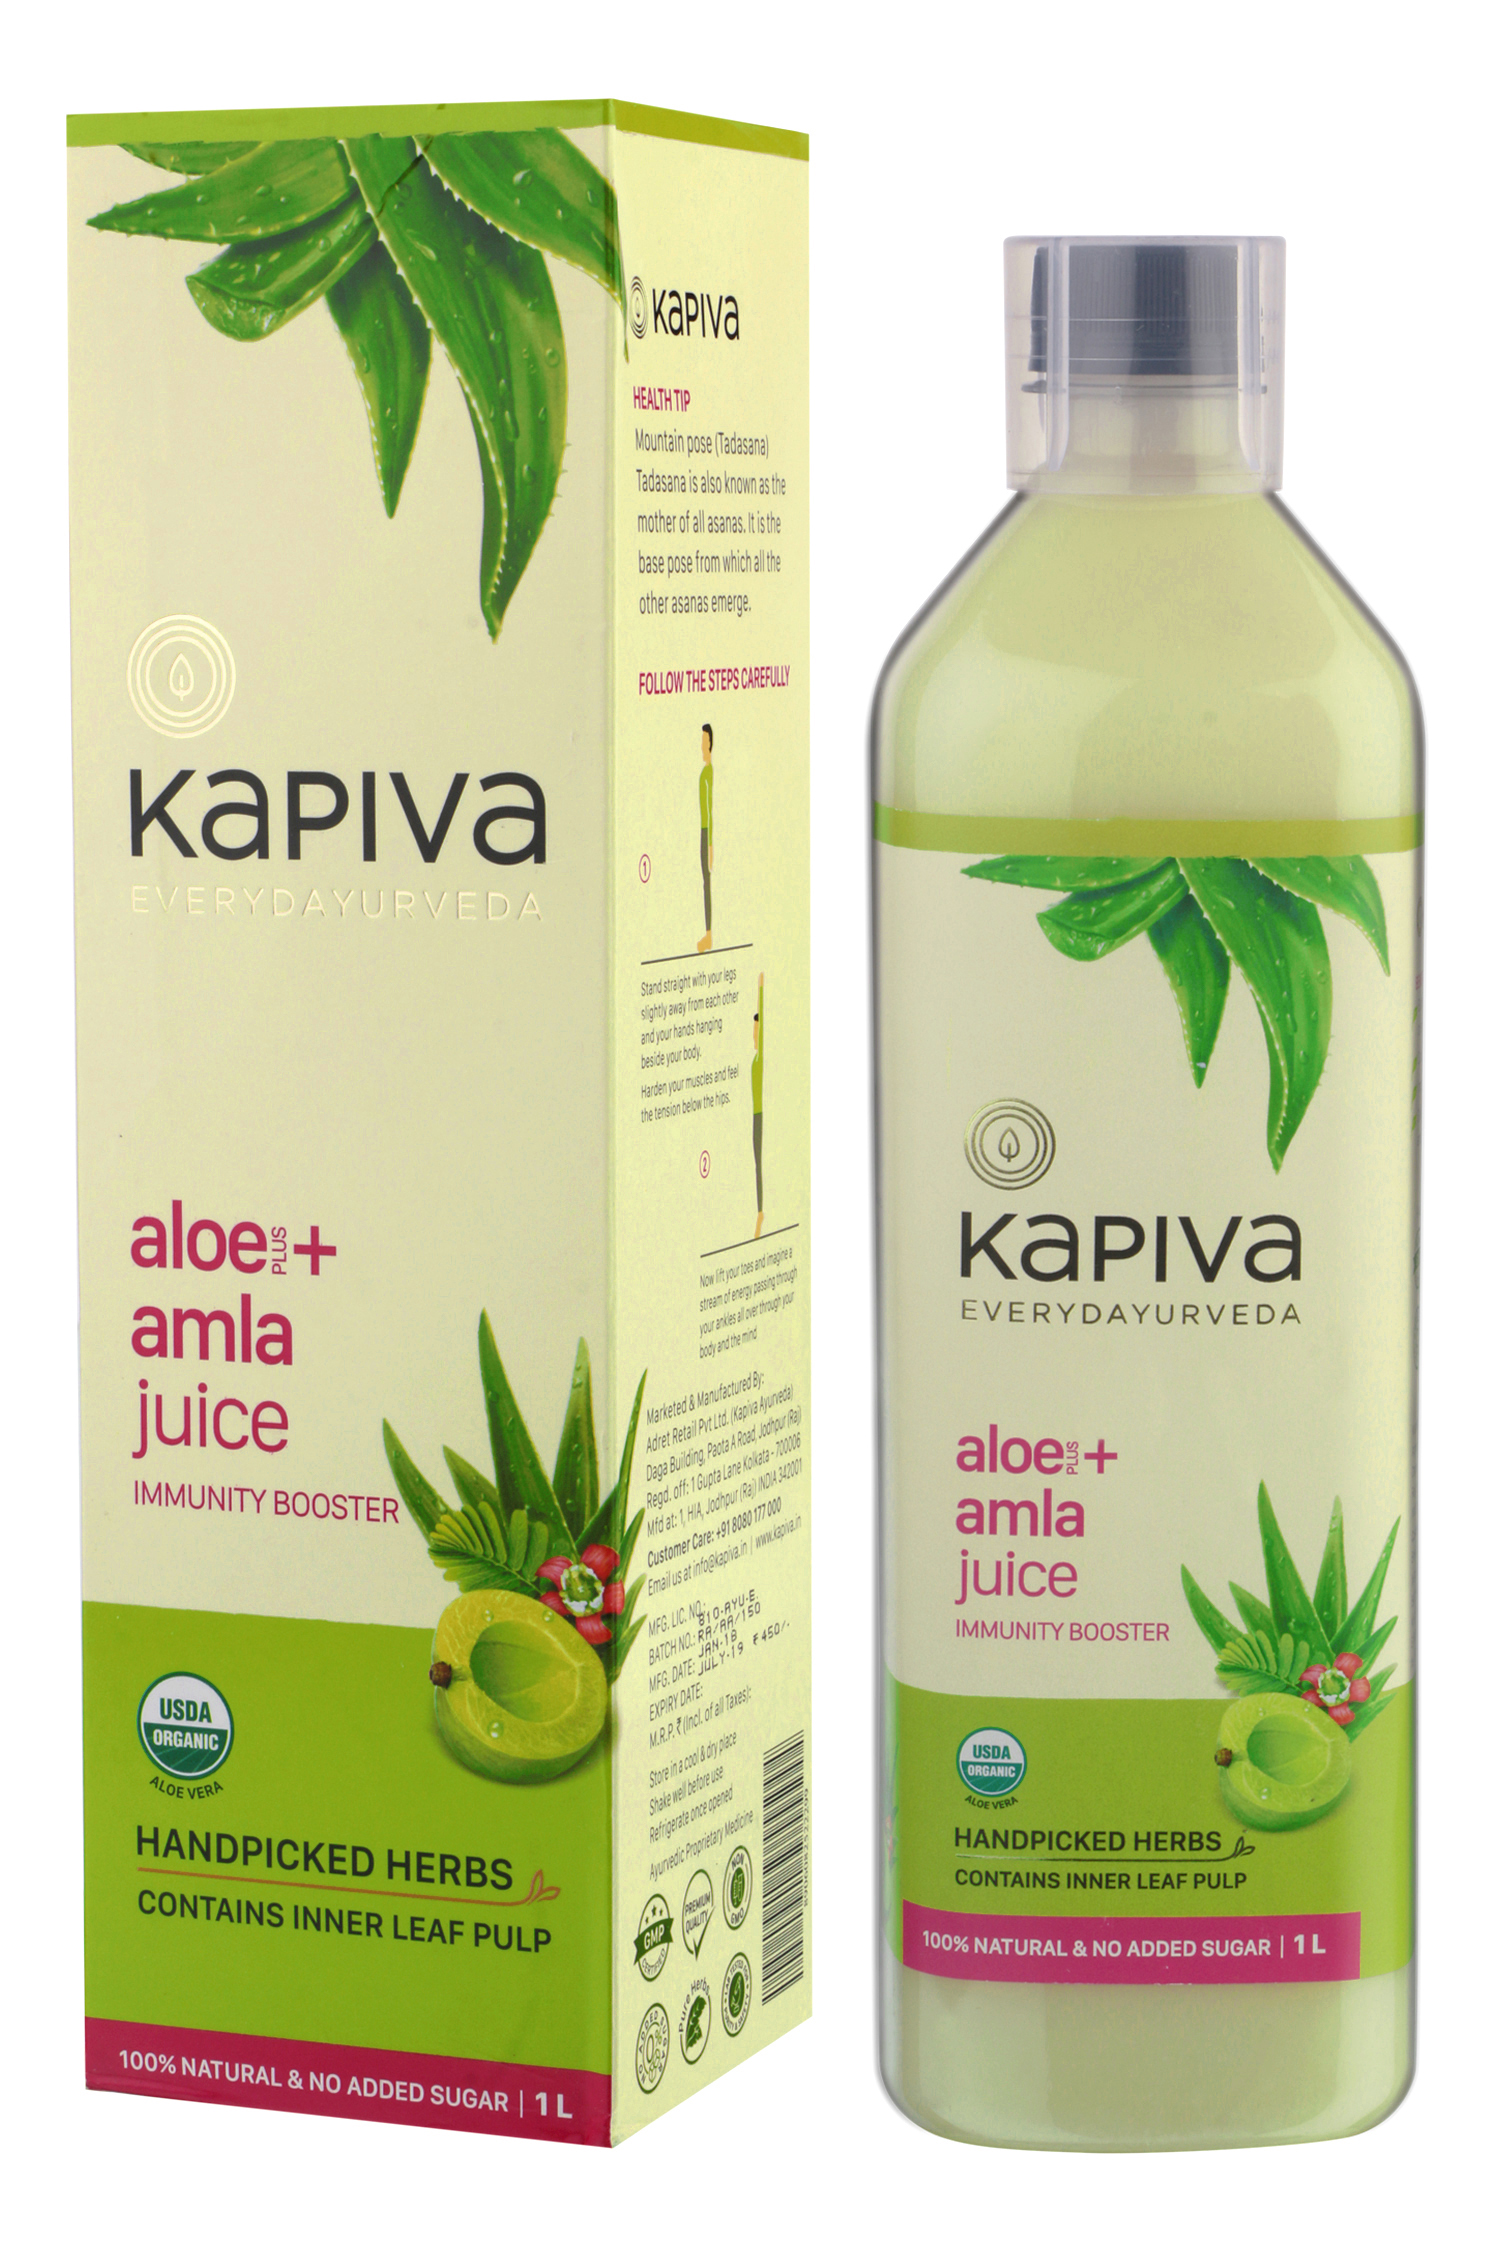 Buy Kapiva Aloe + Amla Juice at Best Price Online